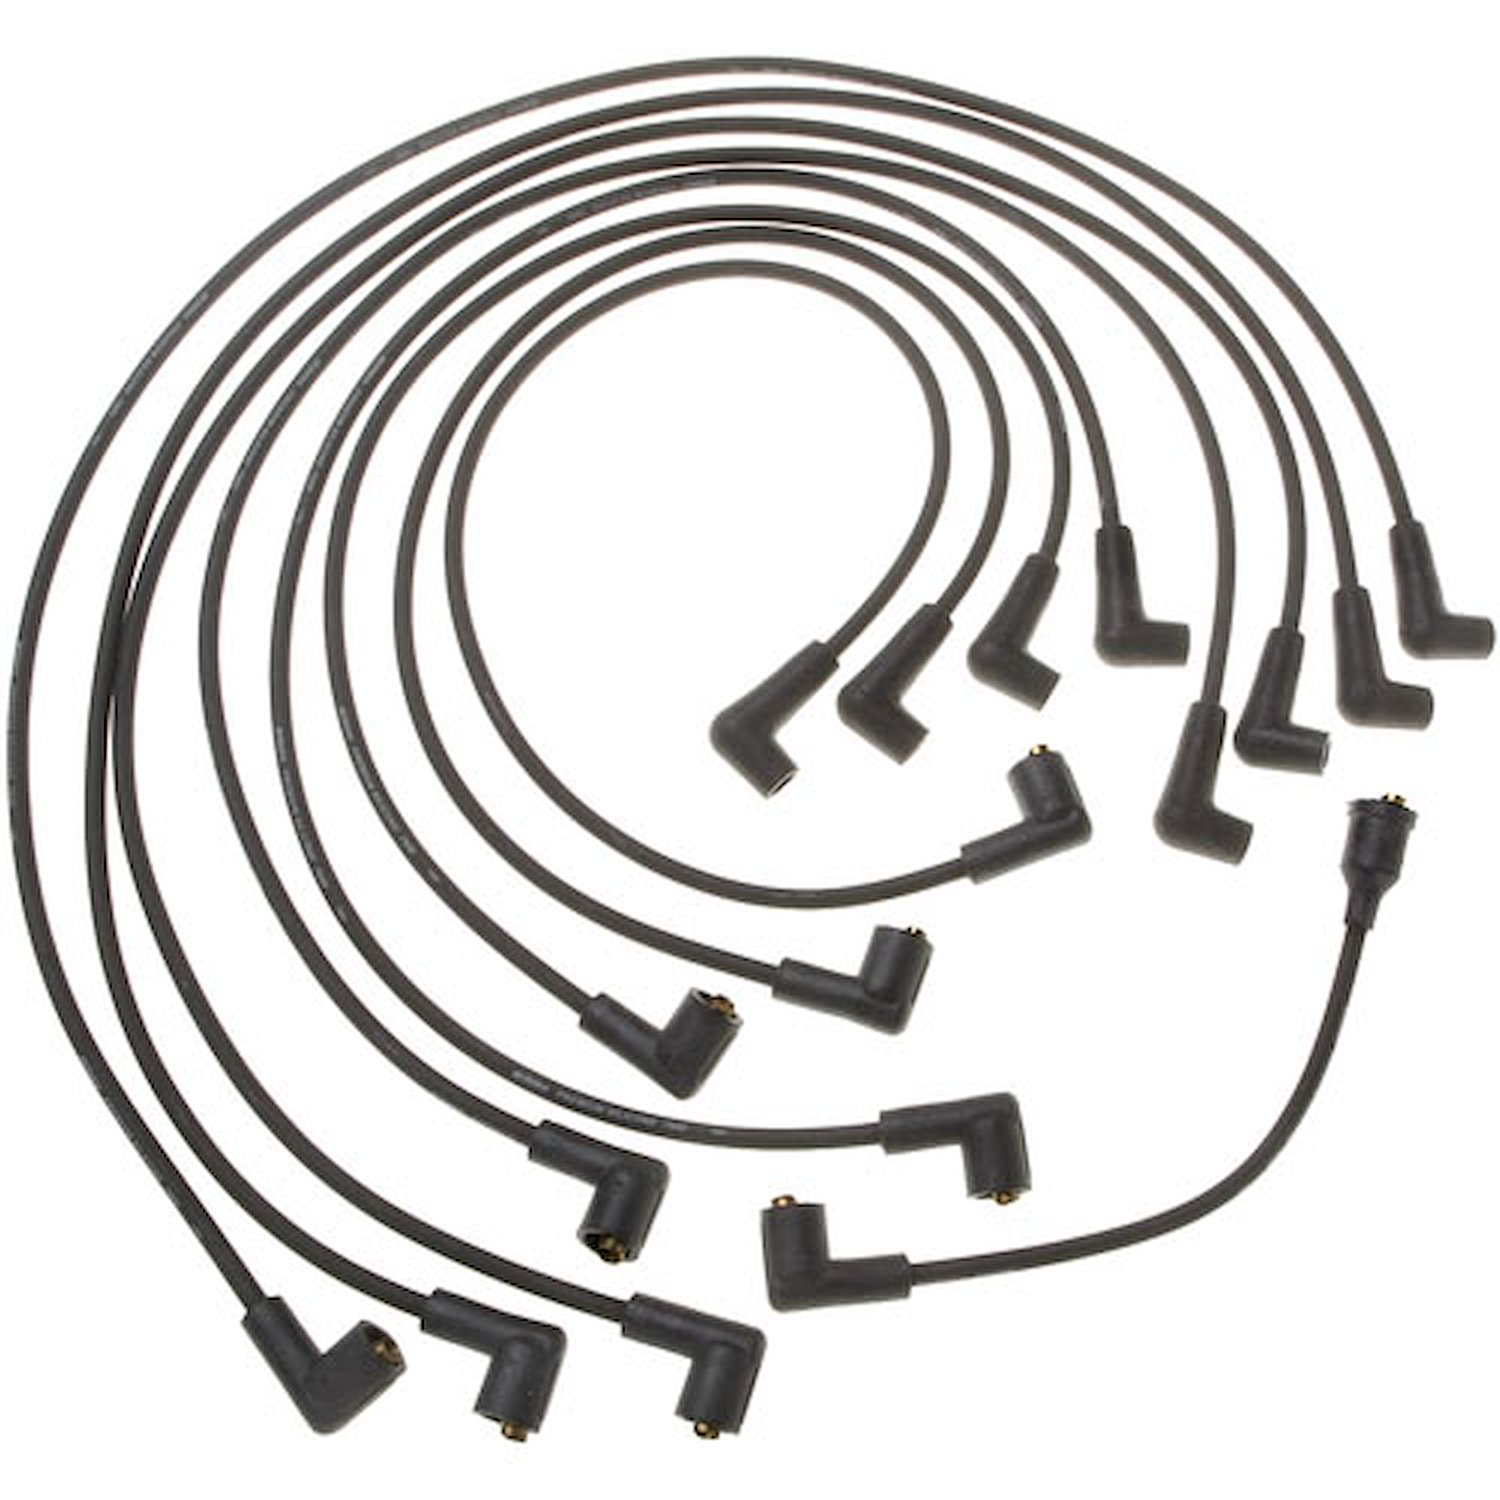 908W Spiral Core Spark Plug Wire Set [Black]